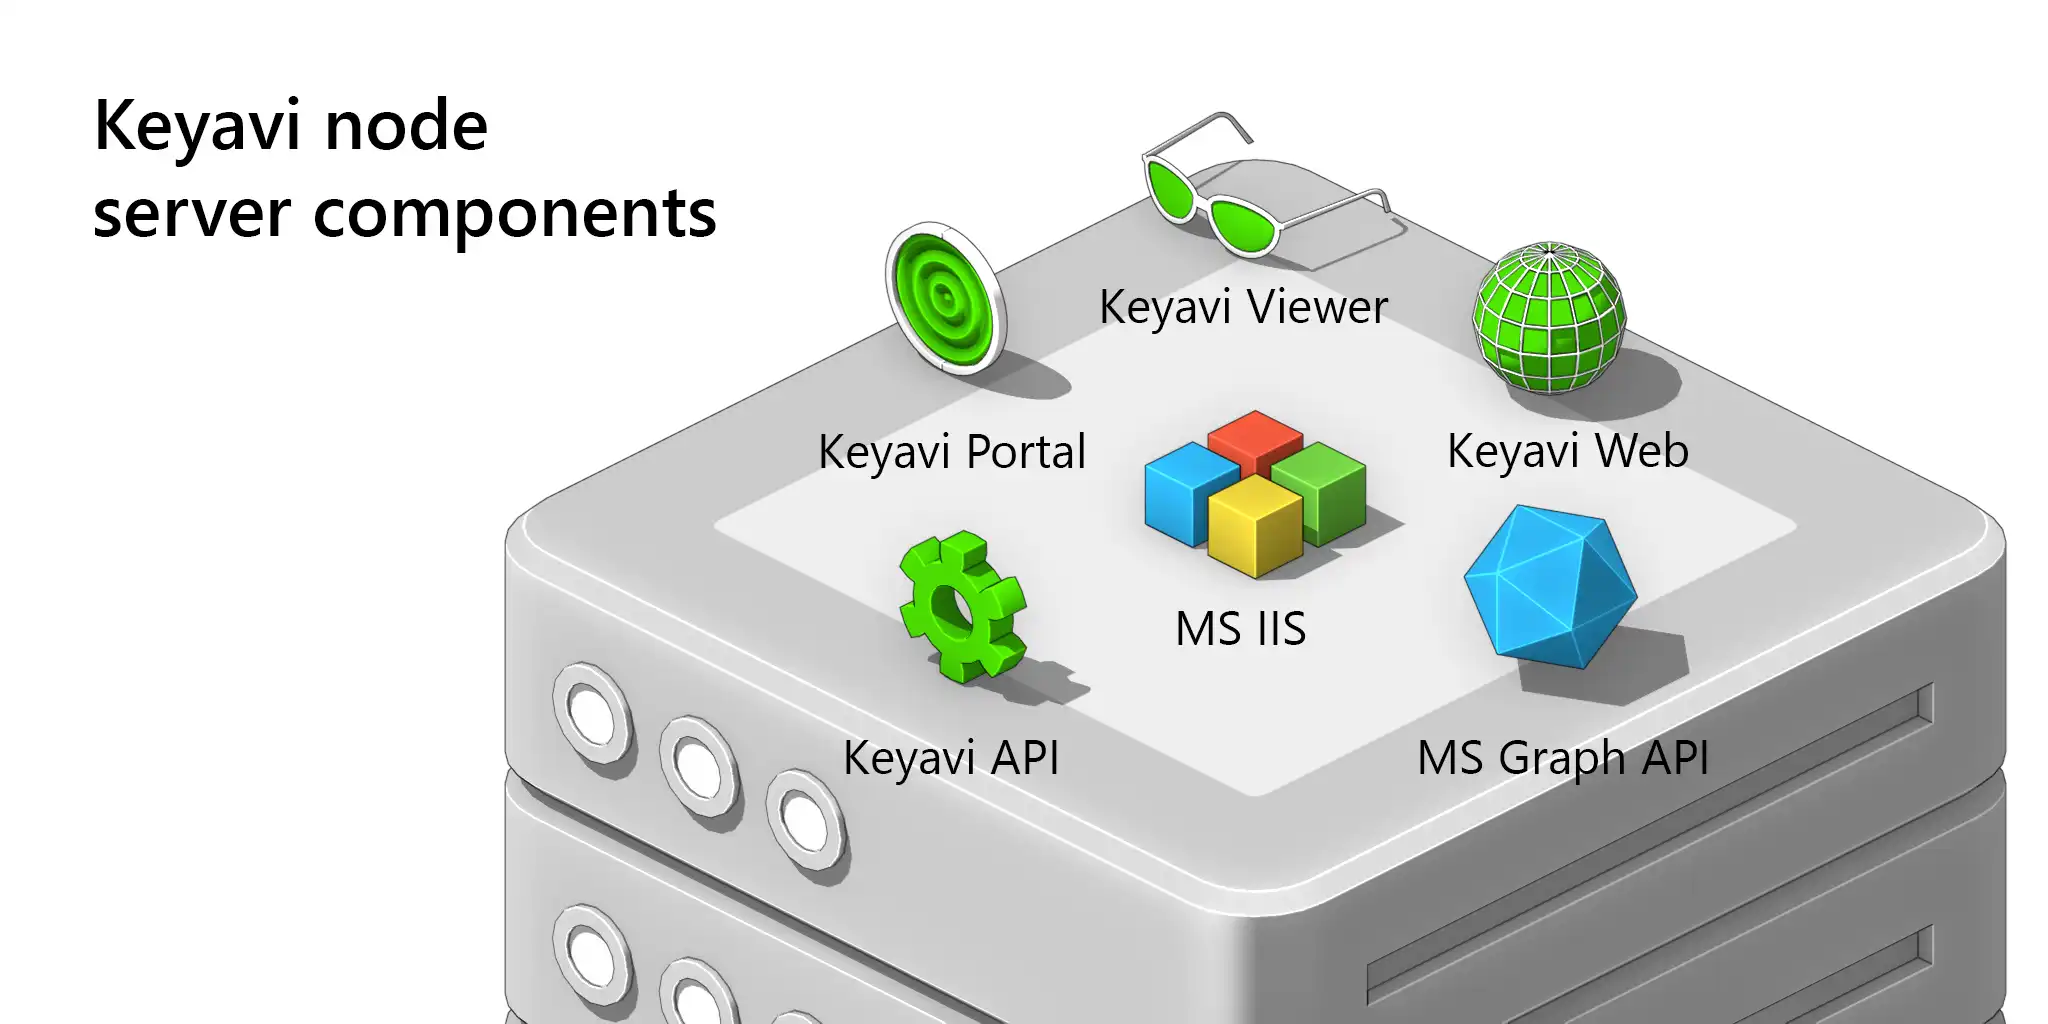 Keyavi Node server components